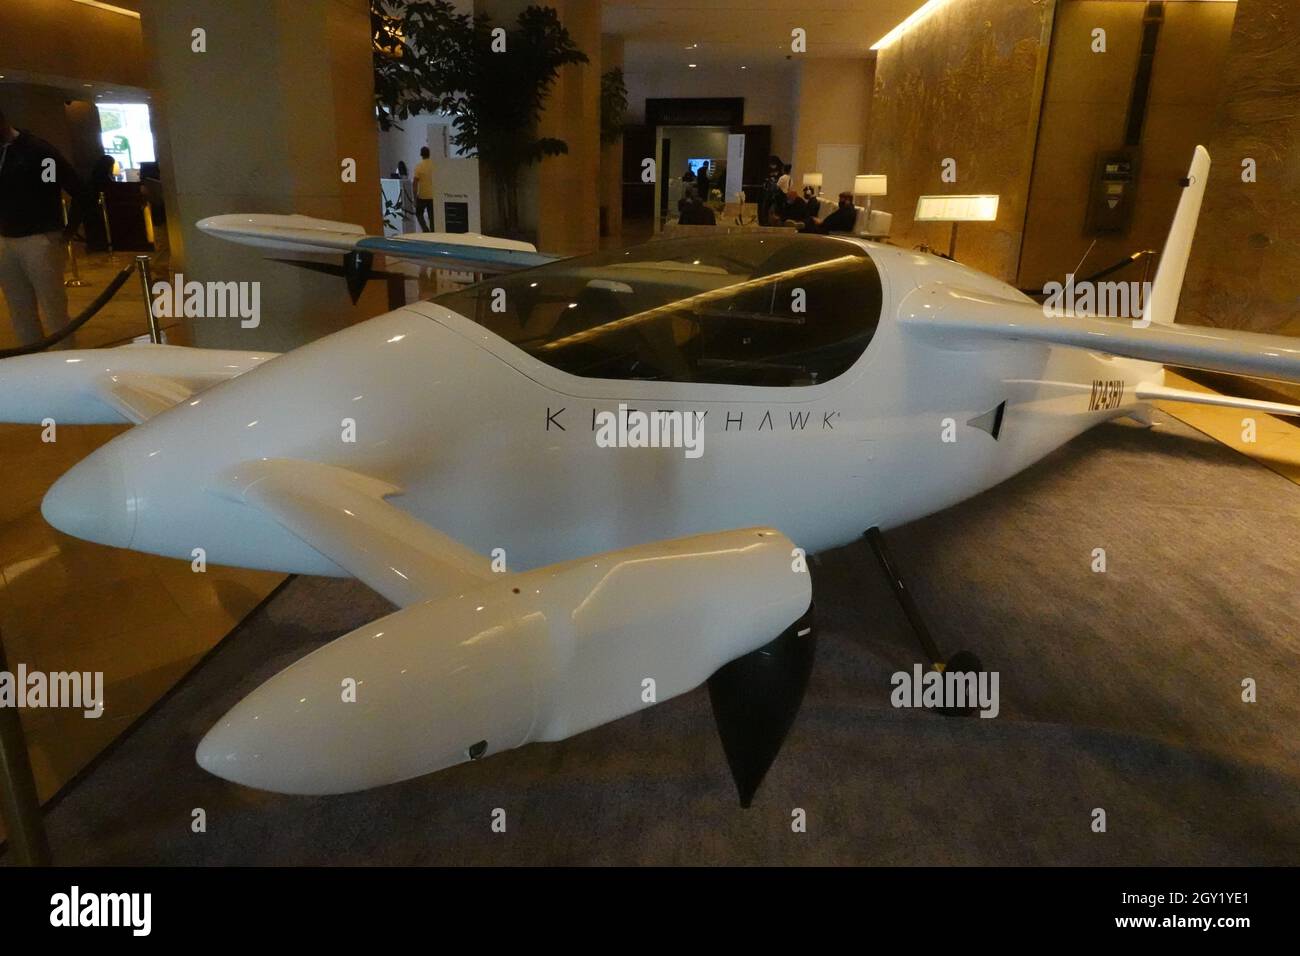 Kitty Hawk pilotloses Flugzeug in der Lobby des Hilton Hotel Beverly Hills Stockfoto